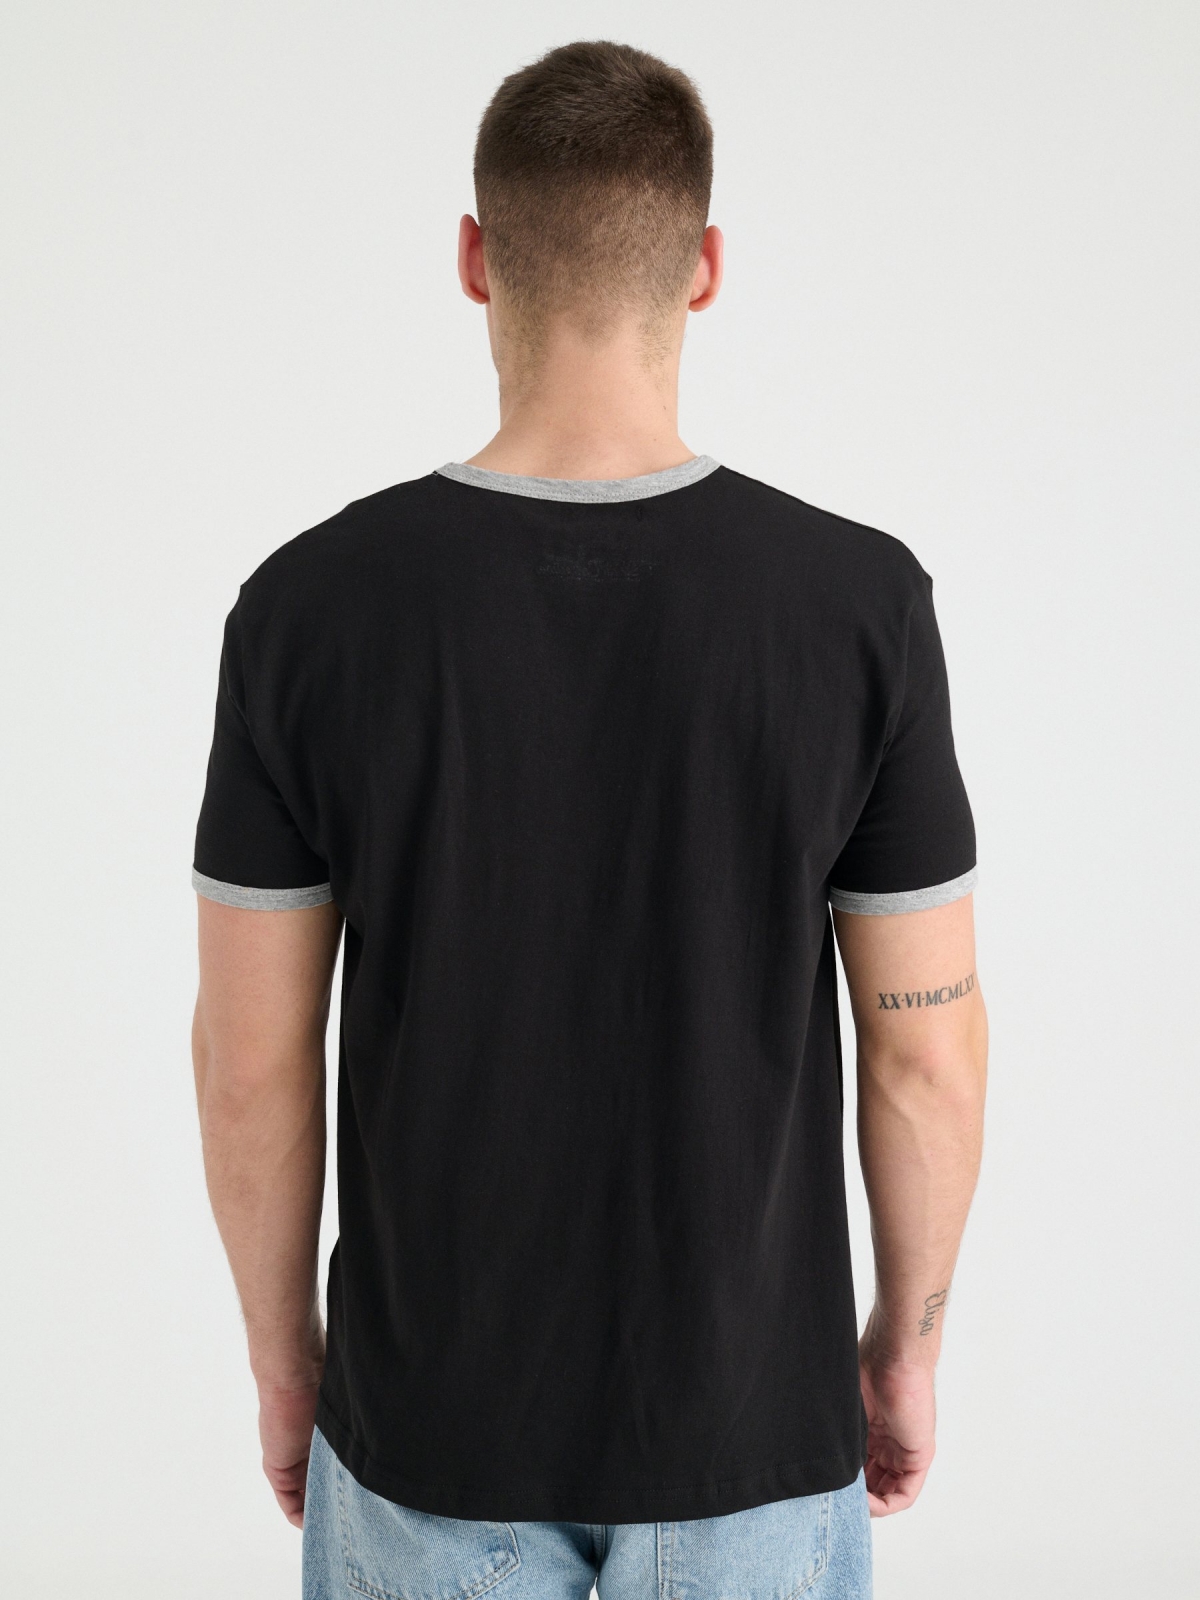 Camiseta básica contrastes negro vista media trasera